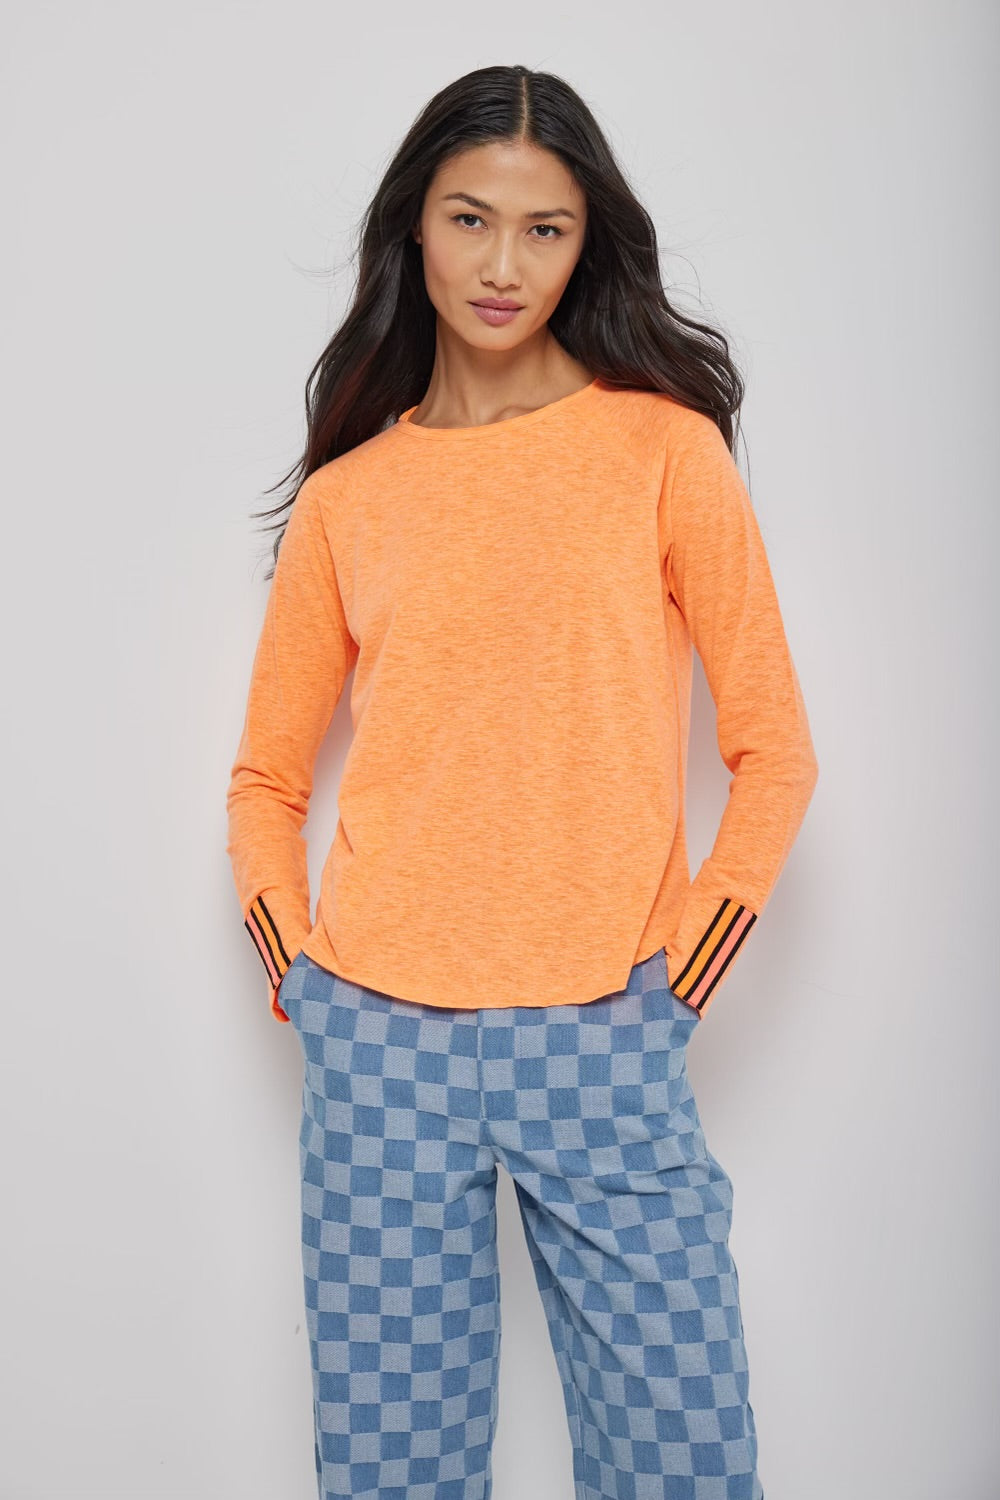 LISA TODD- Wear + Repeat Tangerine